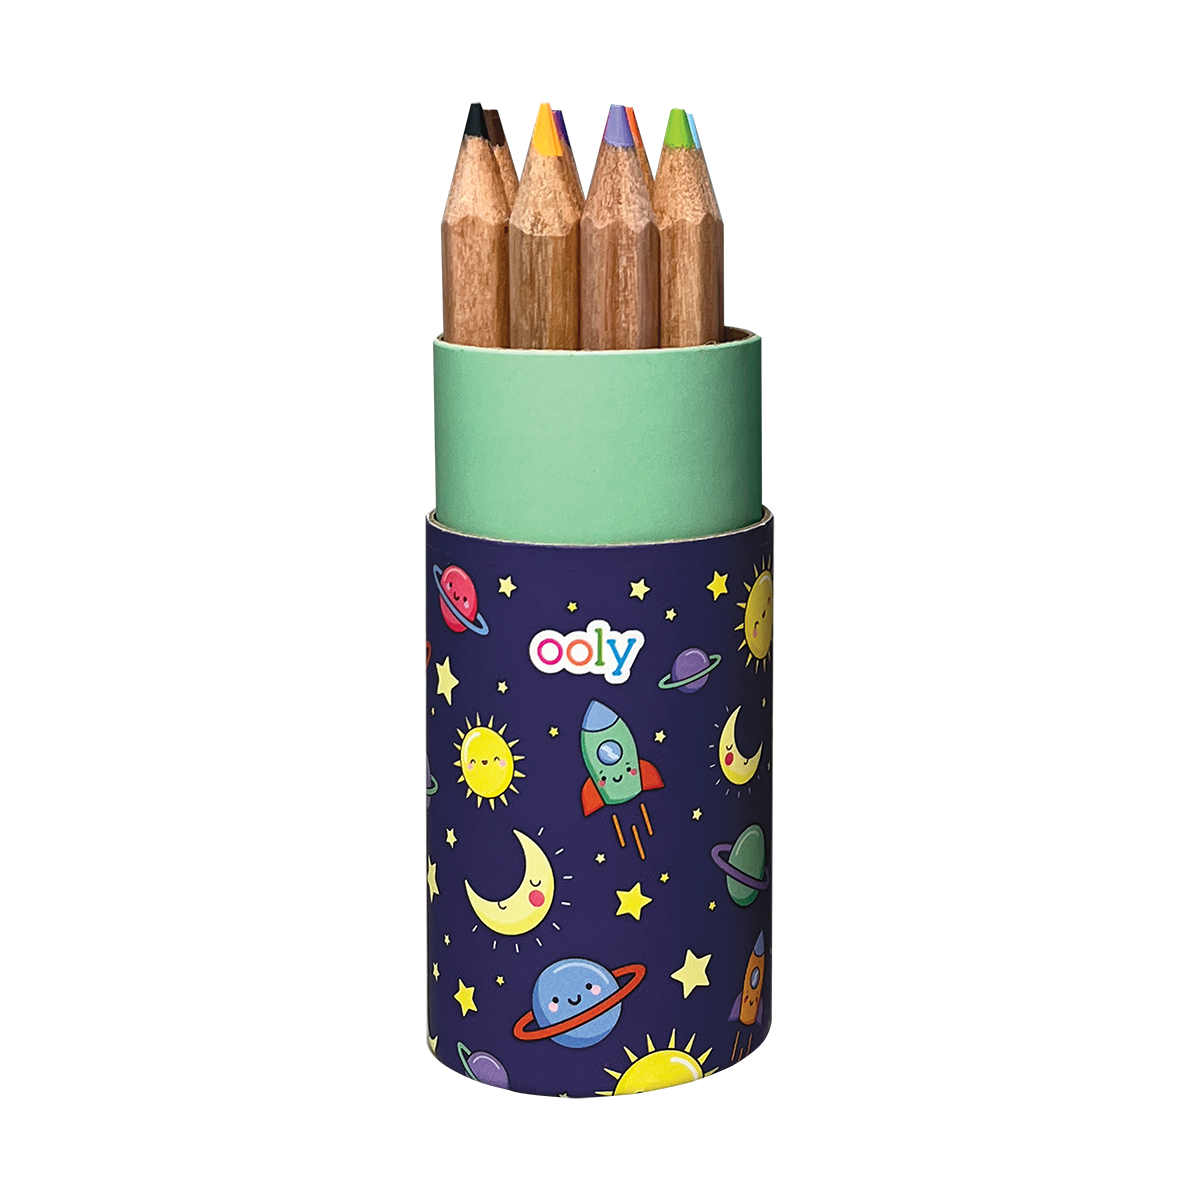 Dropship Art Colored Pencils 12 Colors Wooden Pencil Set For Kids